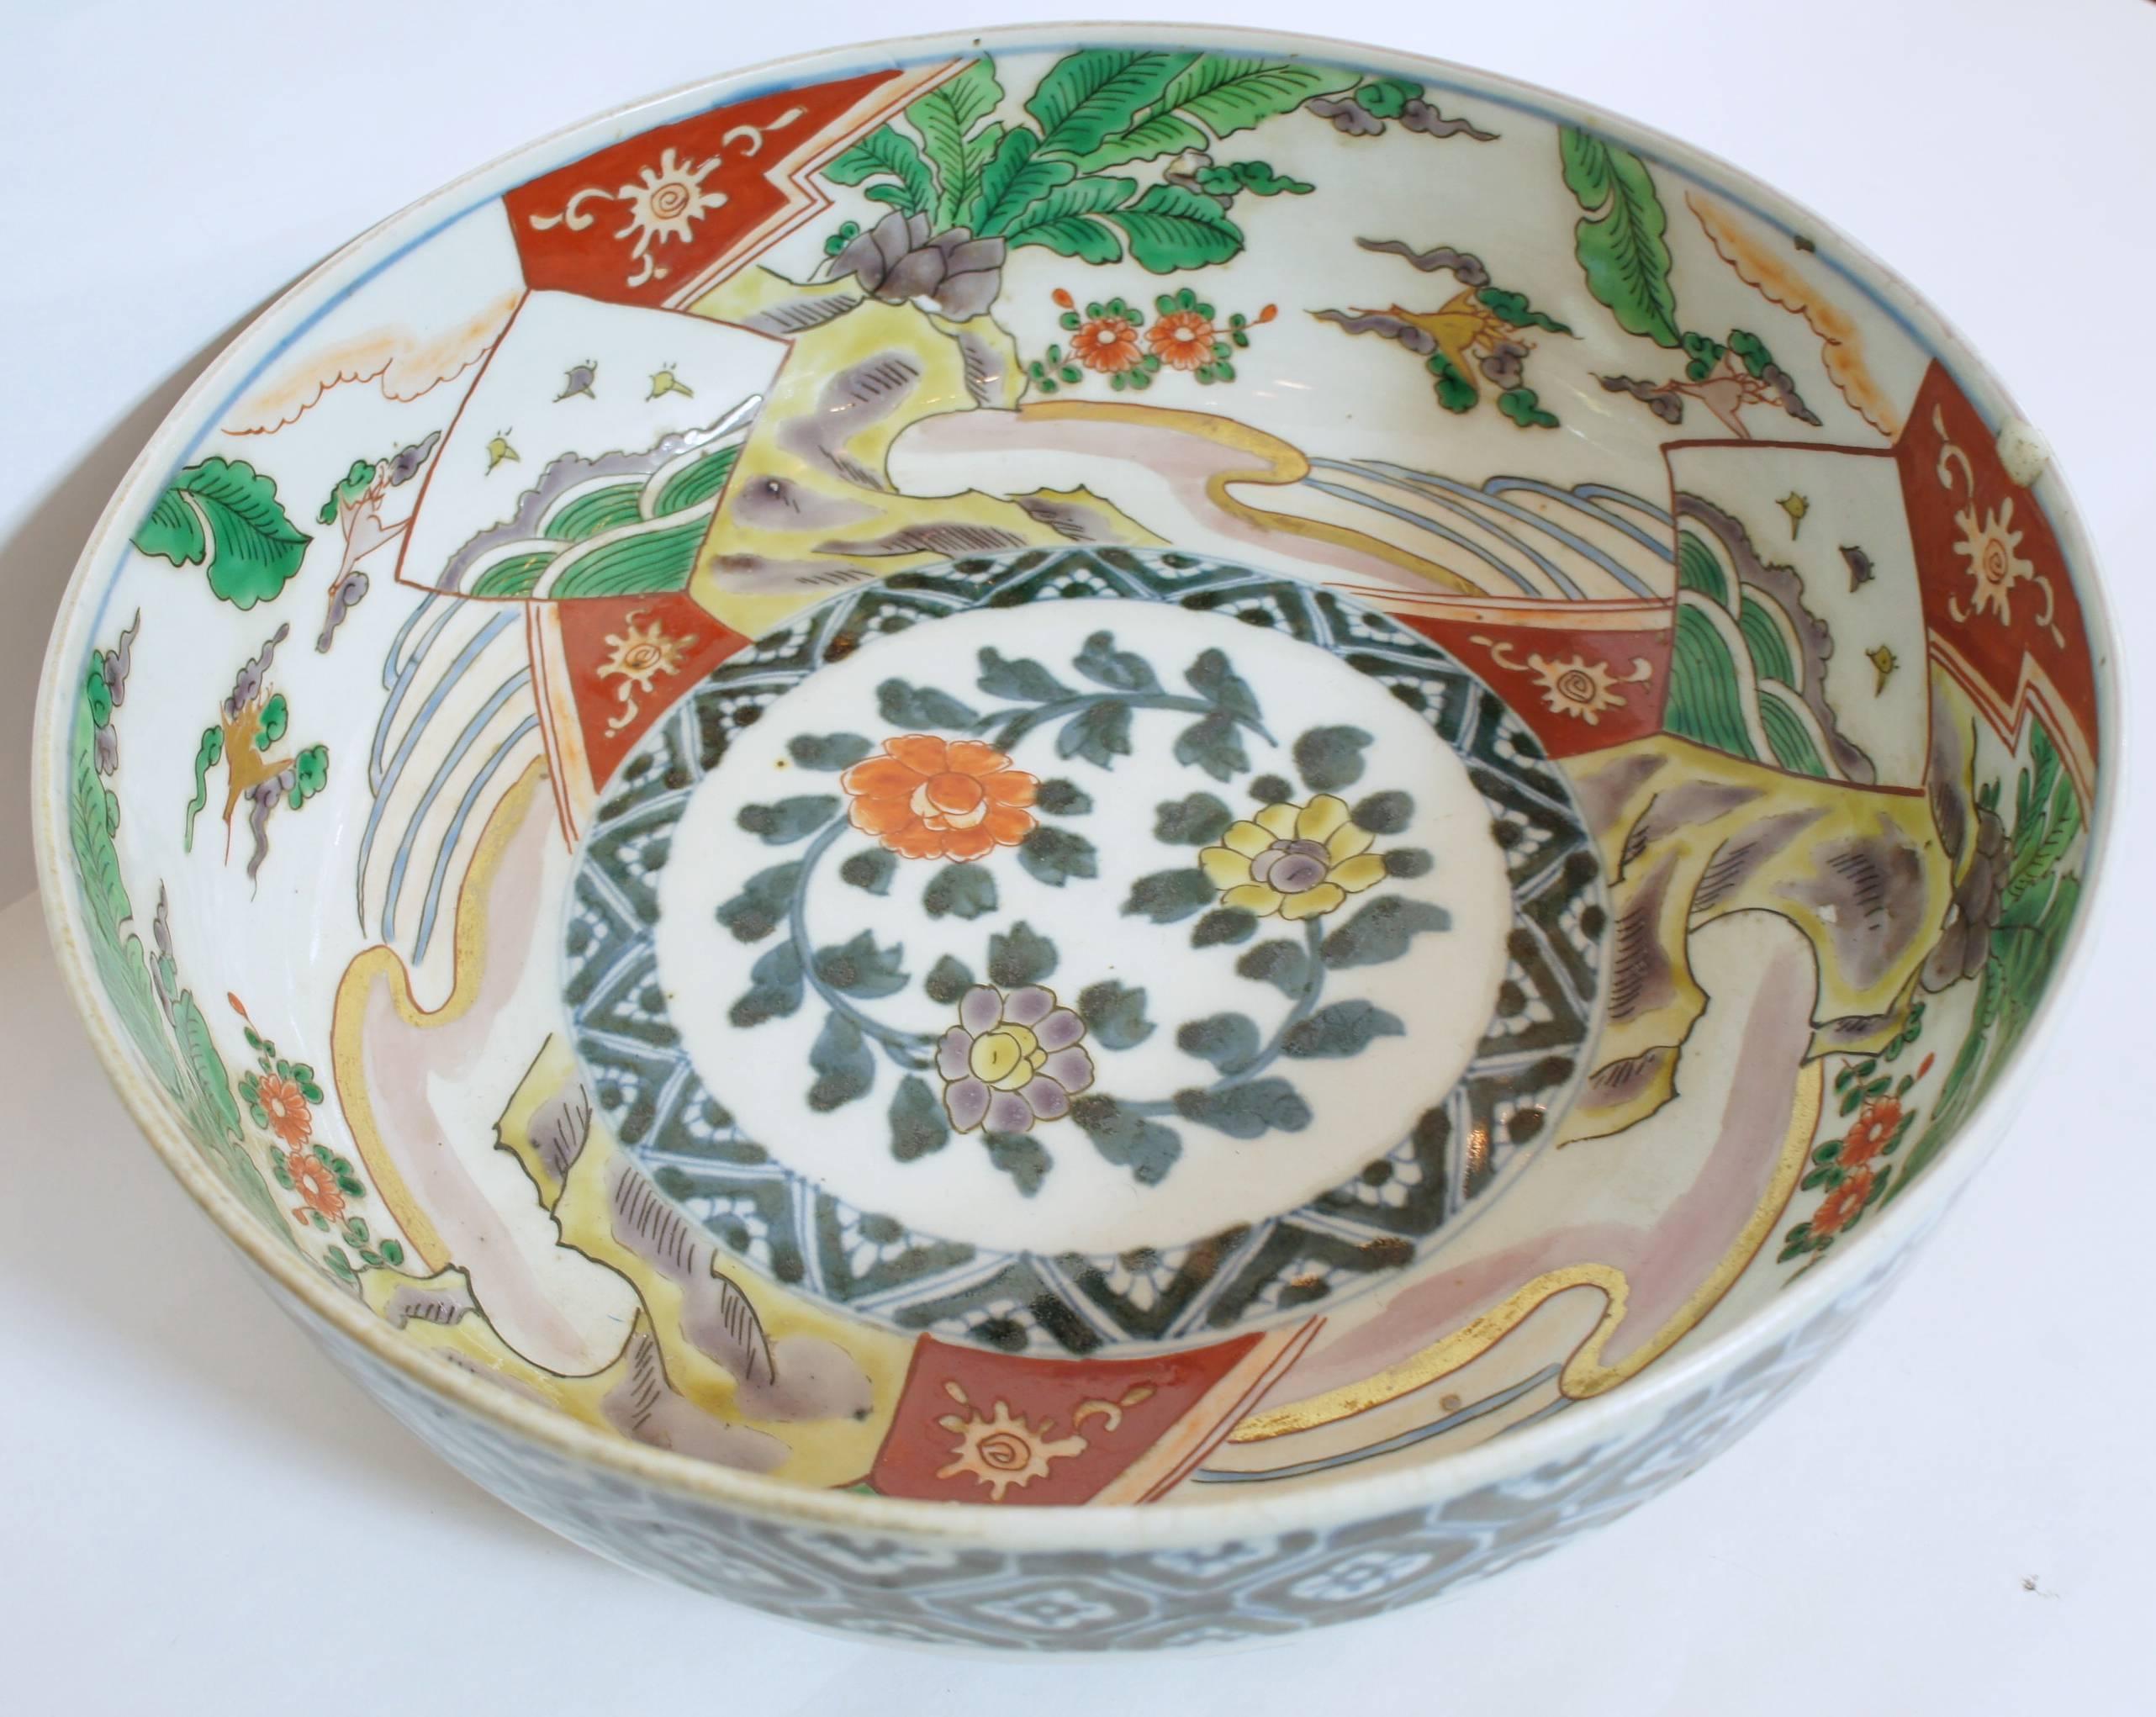 Edo Japanese Colorful Landscape and Floral Motif on Ceramic Koimari Ware Bowl, 1800s